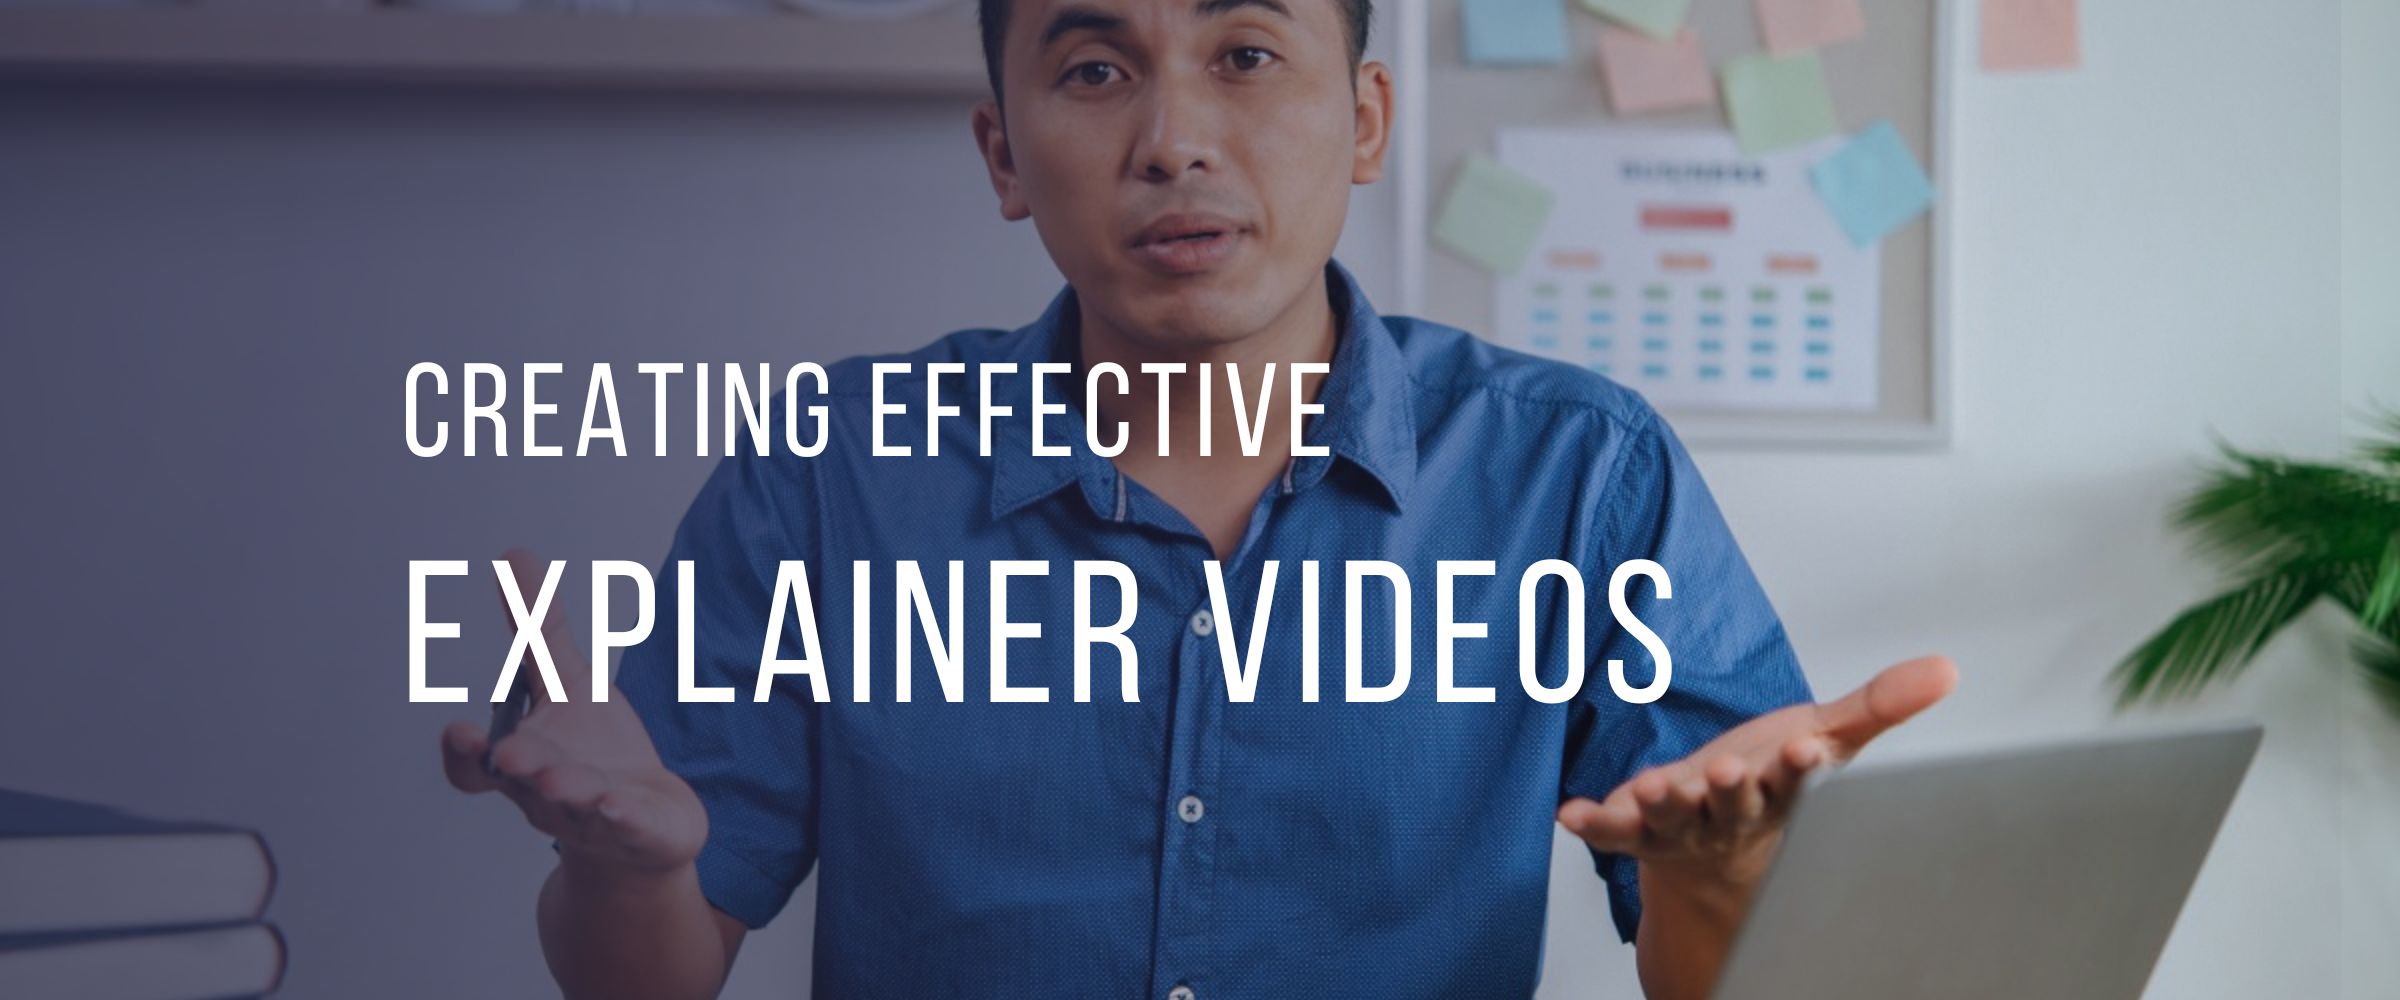 Creating Effective Explainer Videos